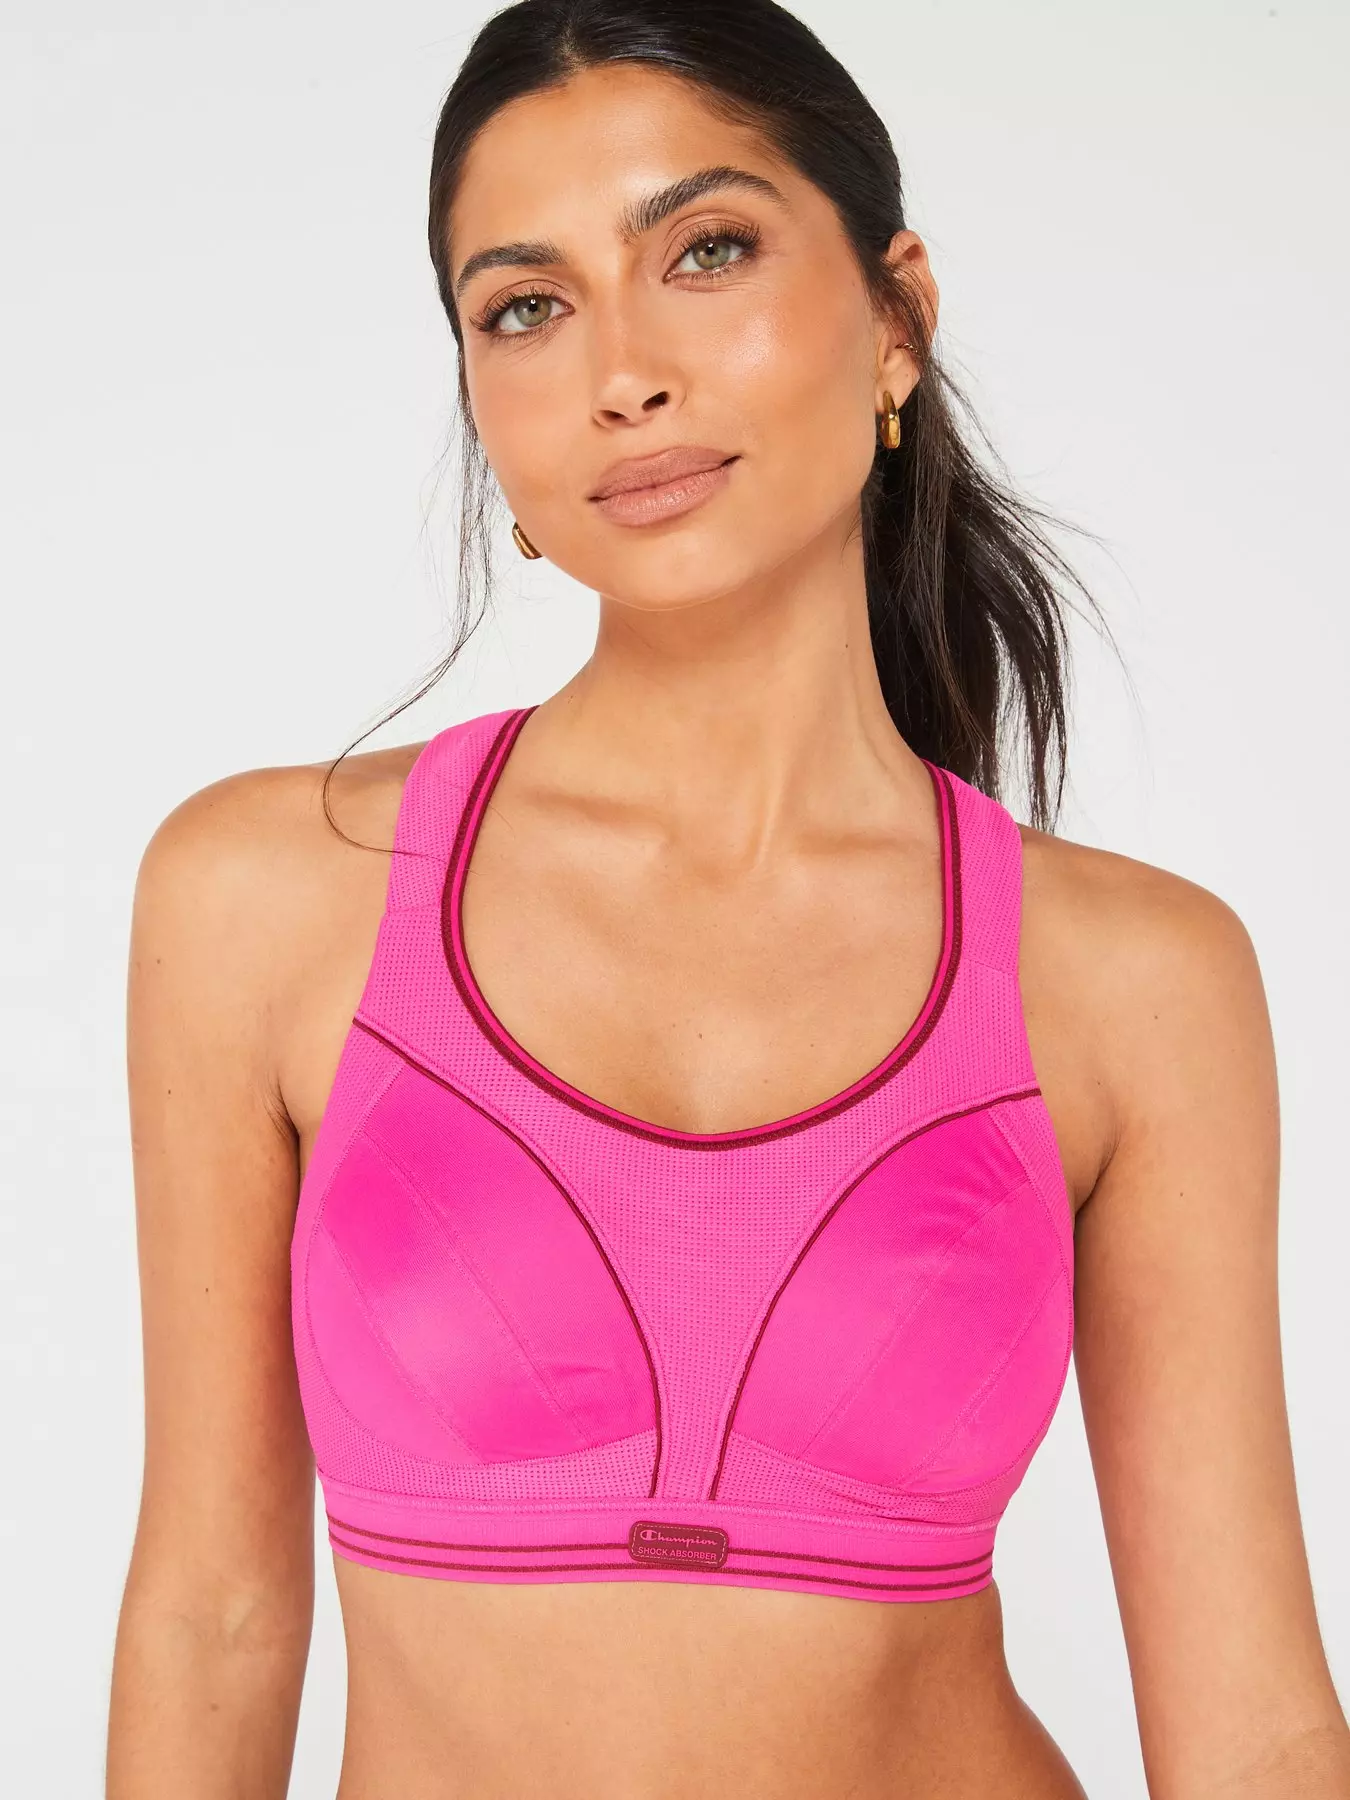 Eashery Sport Bras for Women Adjustable Comfy Womens Bra Hot Pink M